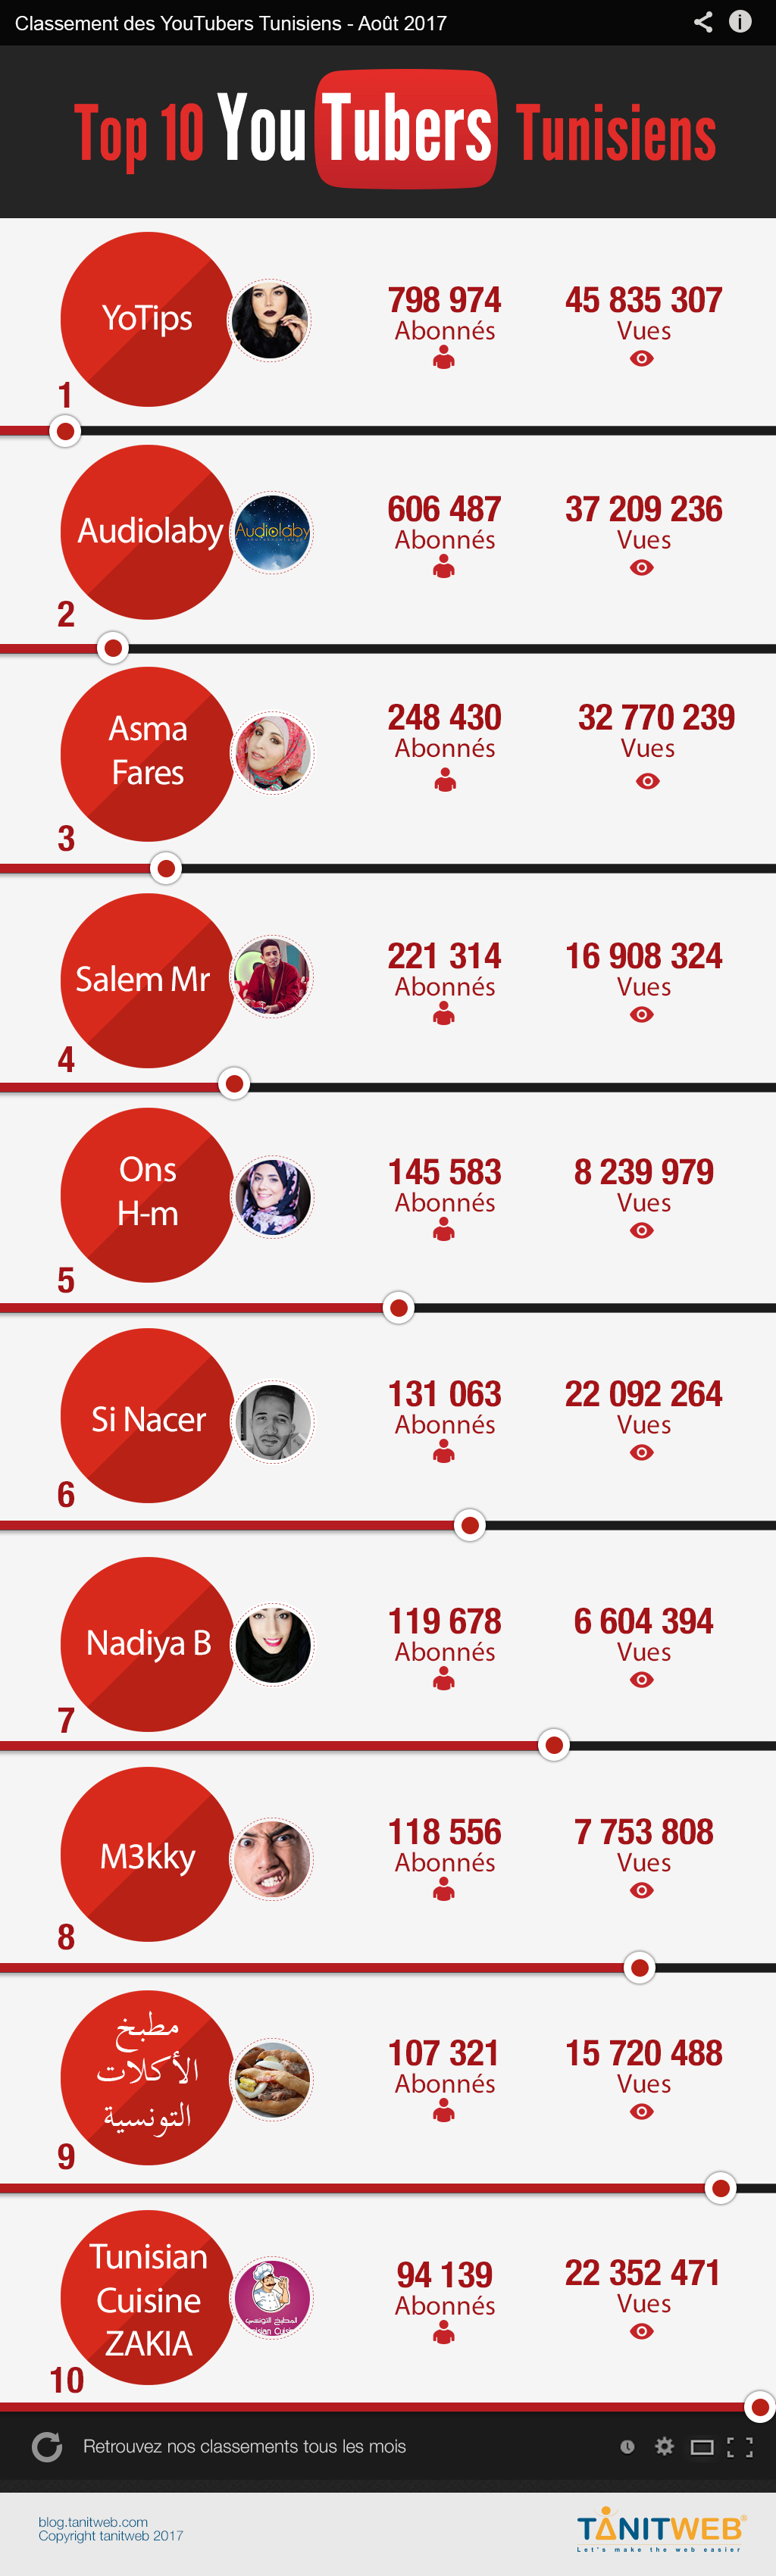 TOP 10 YouTubers Tunisiens